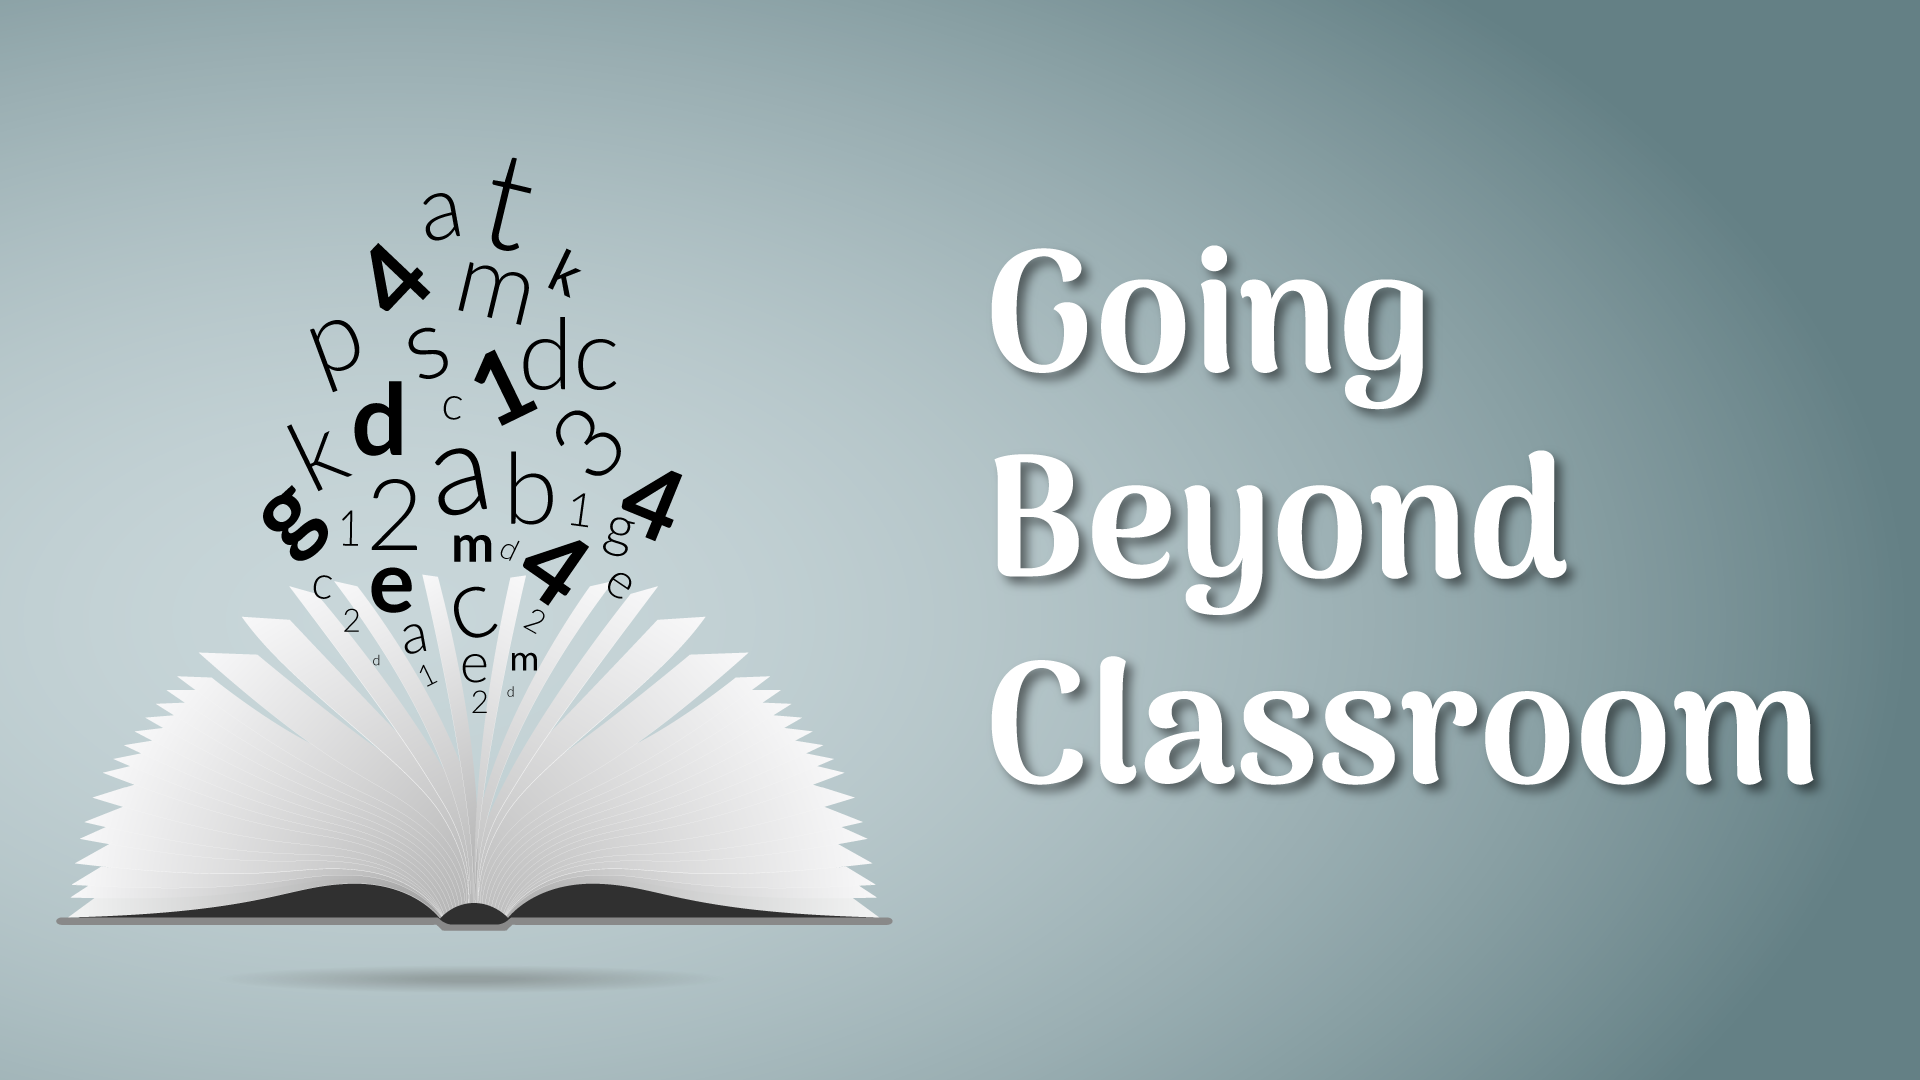 Going beyond classroom